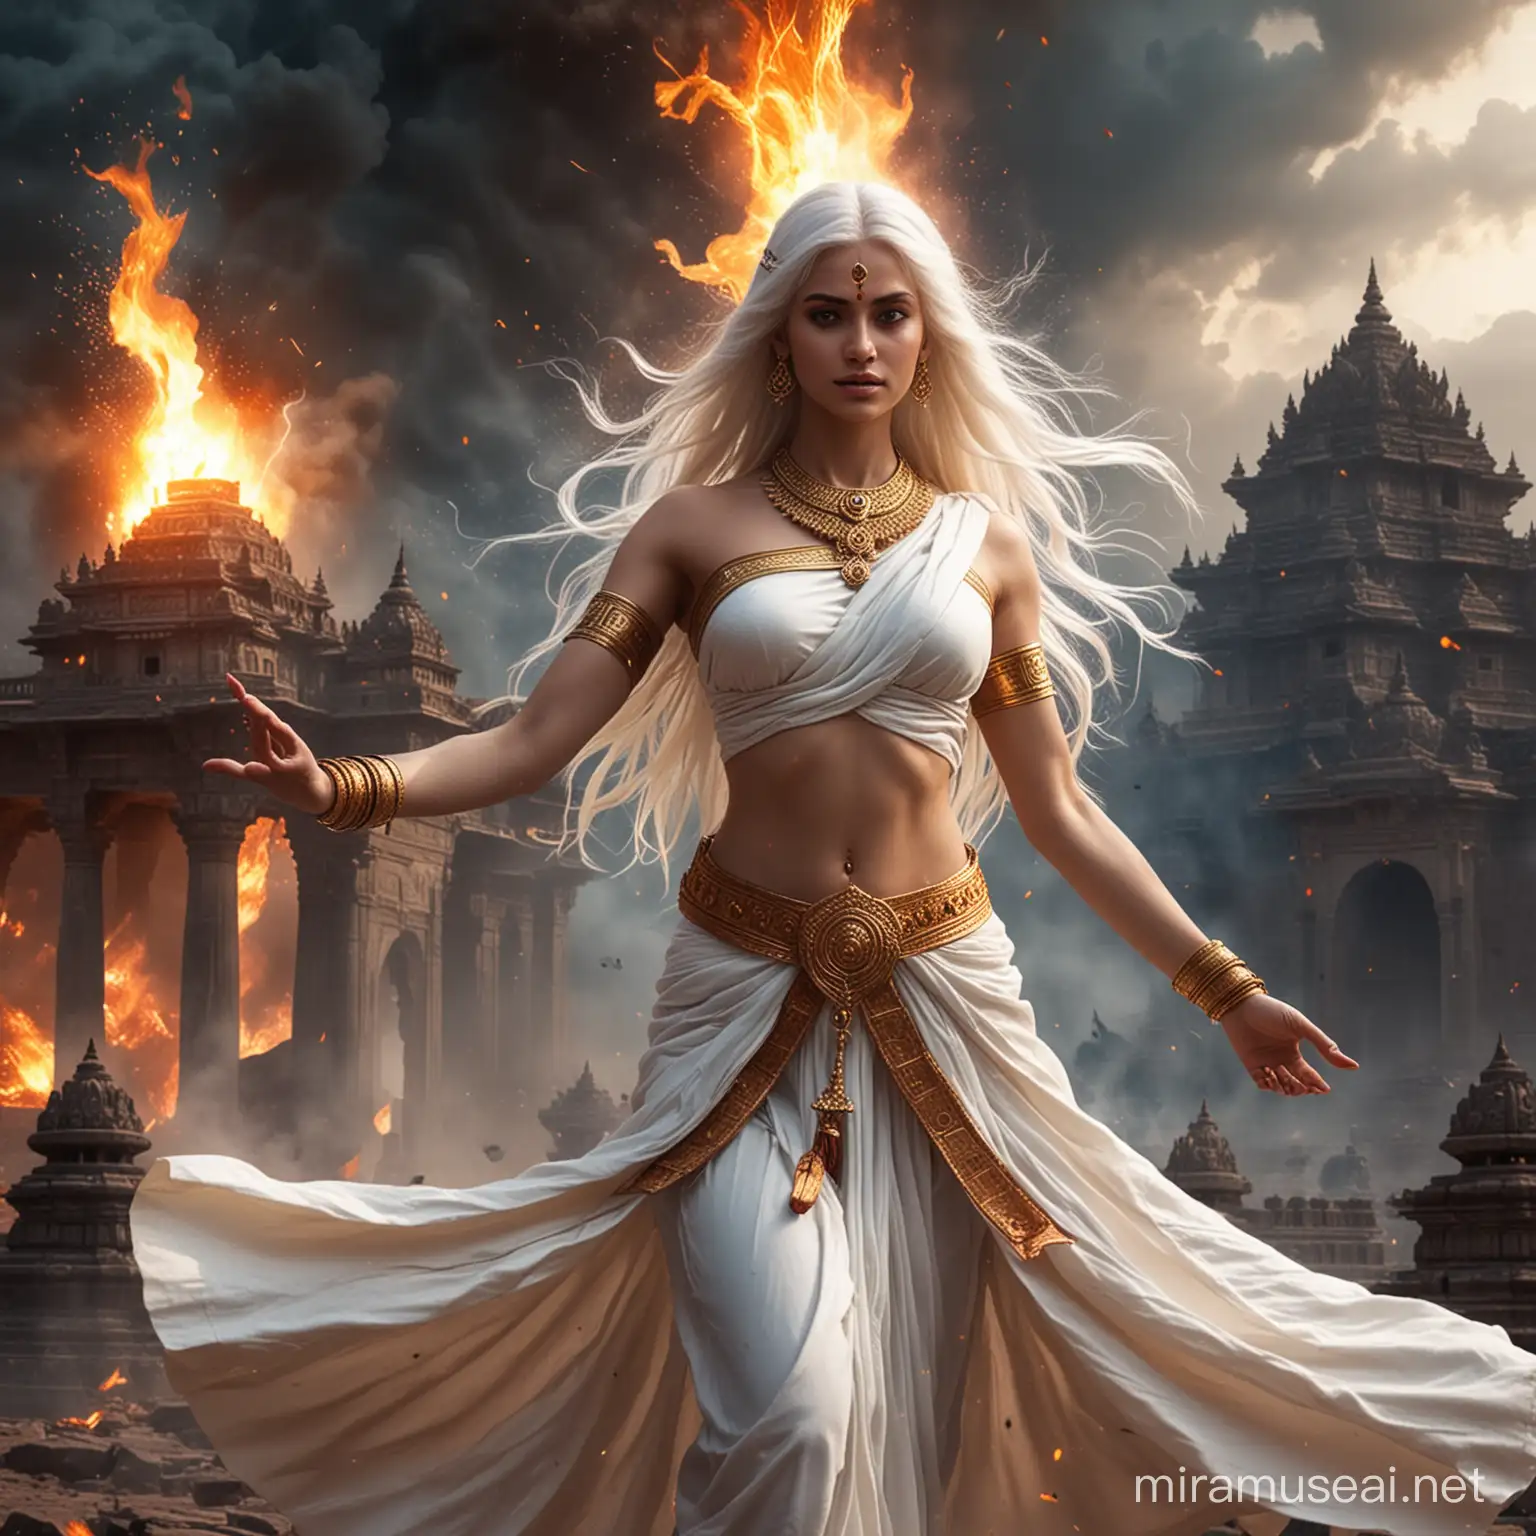 Hindu Empress Goddess in Meditative Combat Amidst Fire and Lightning